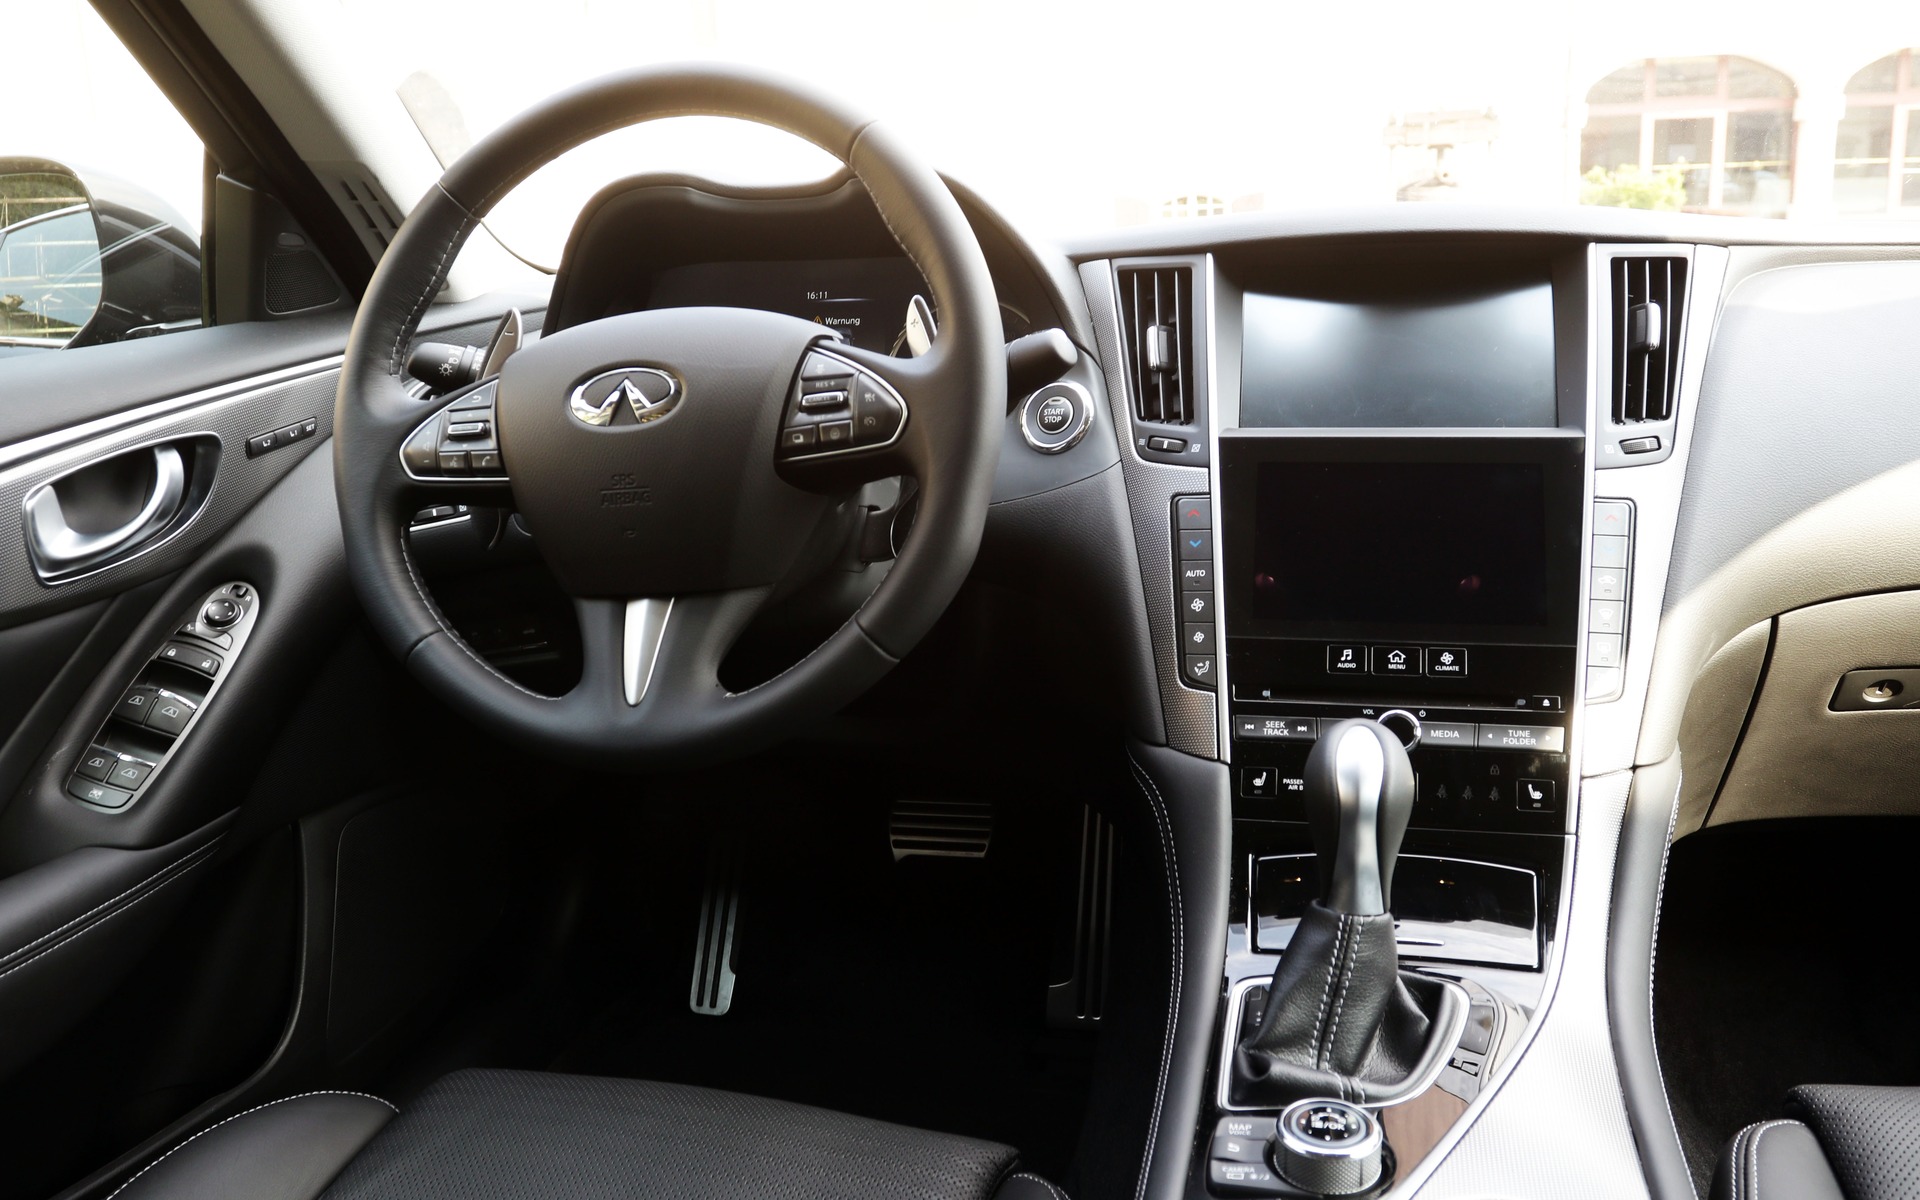 Infiniti Q50 Hybrid 2016 - Cockpit avec deux écrans tactiles superposés